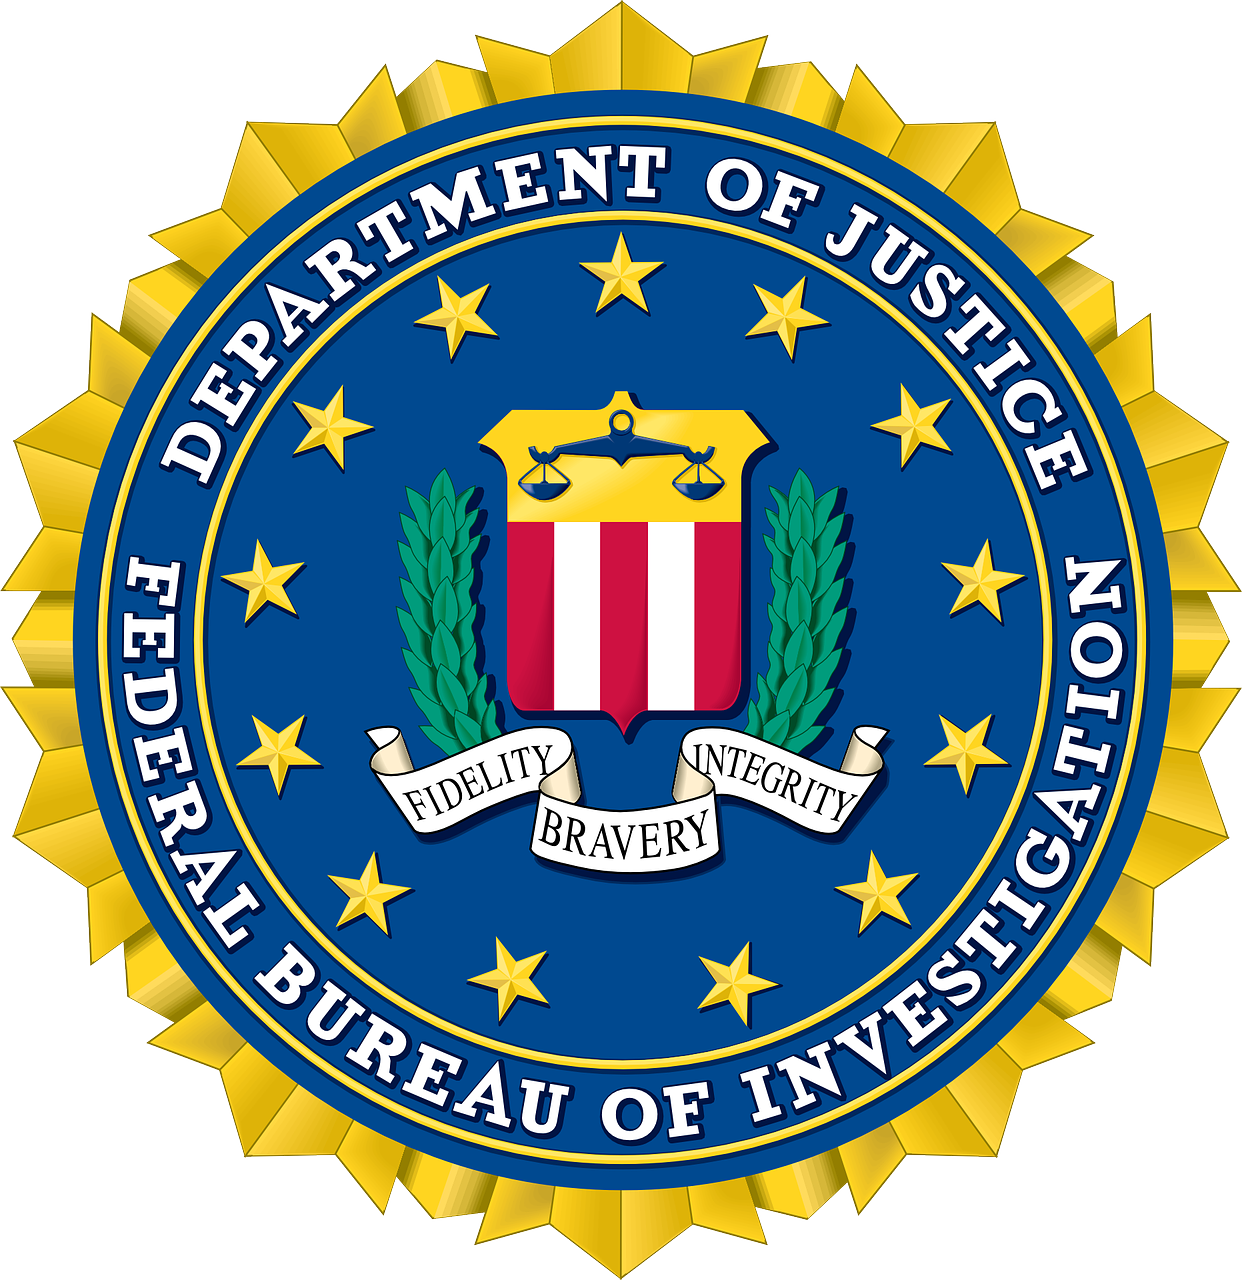 「Proofpoint Blog 第12回 「FBIのIC3レポート:2021年、電子メール詐欺による経済的損失が過去最高を記録」」